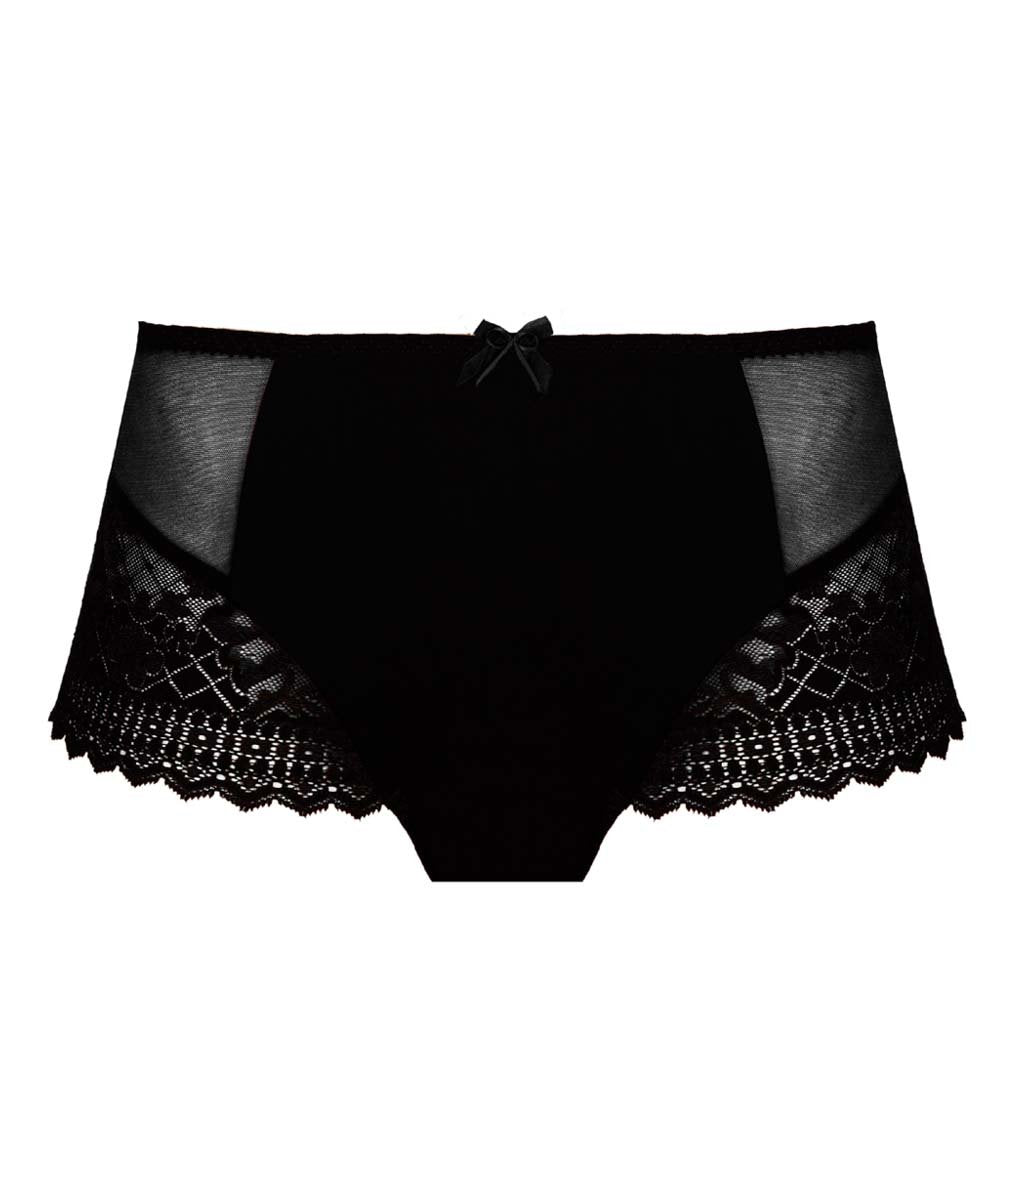 Empreinte 'Melody' (Black) Full Brief - Sandra Dee - Product Shot - Front